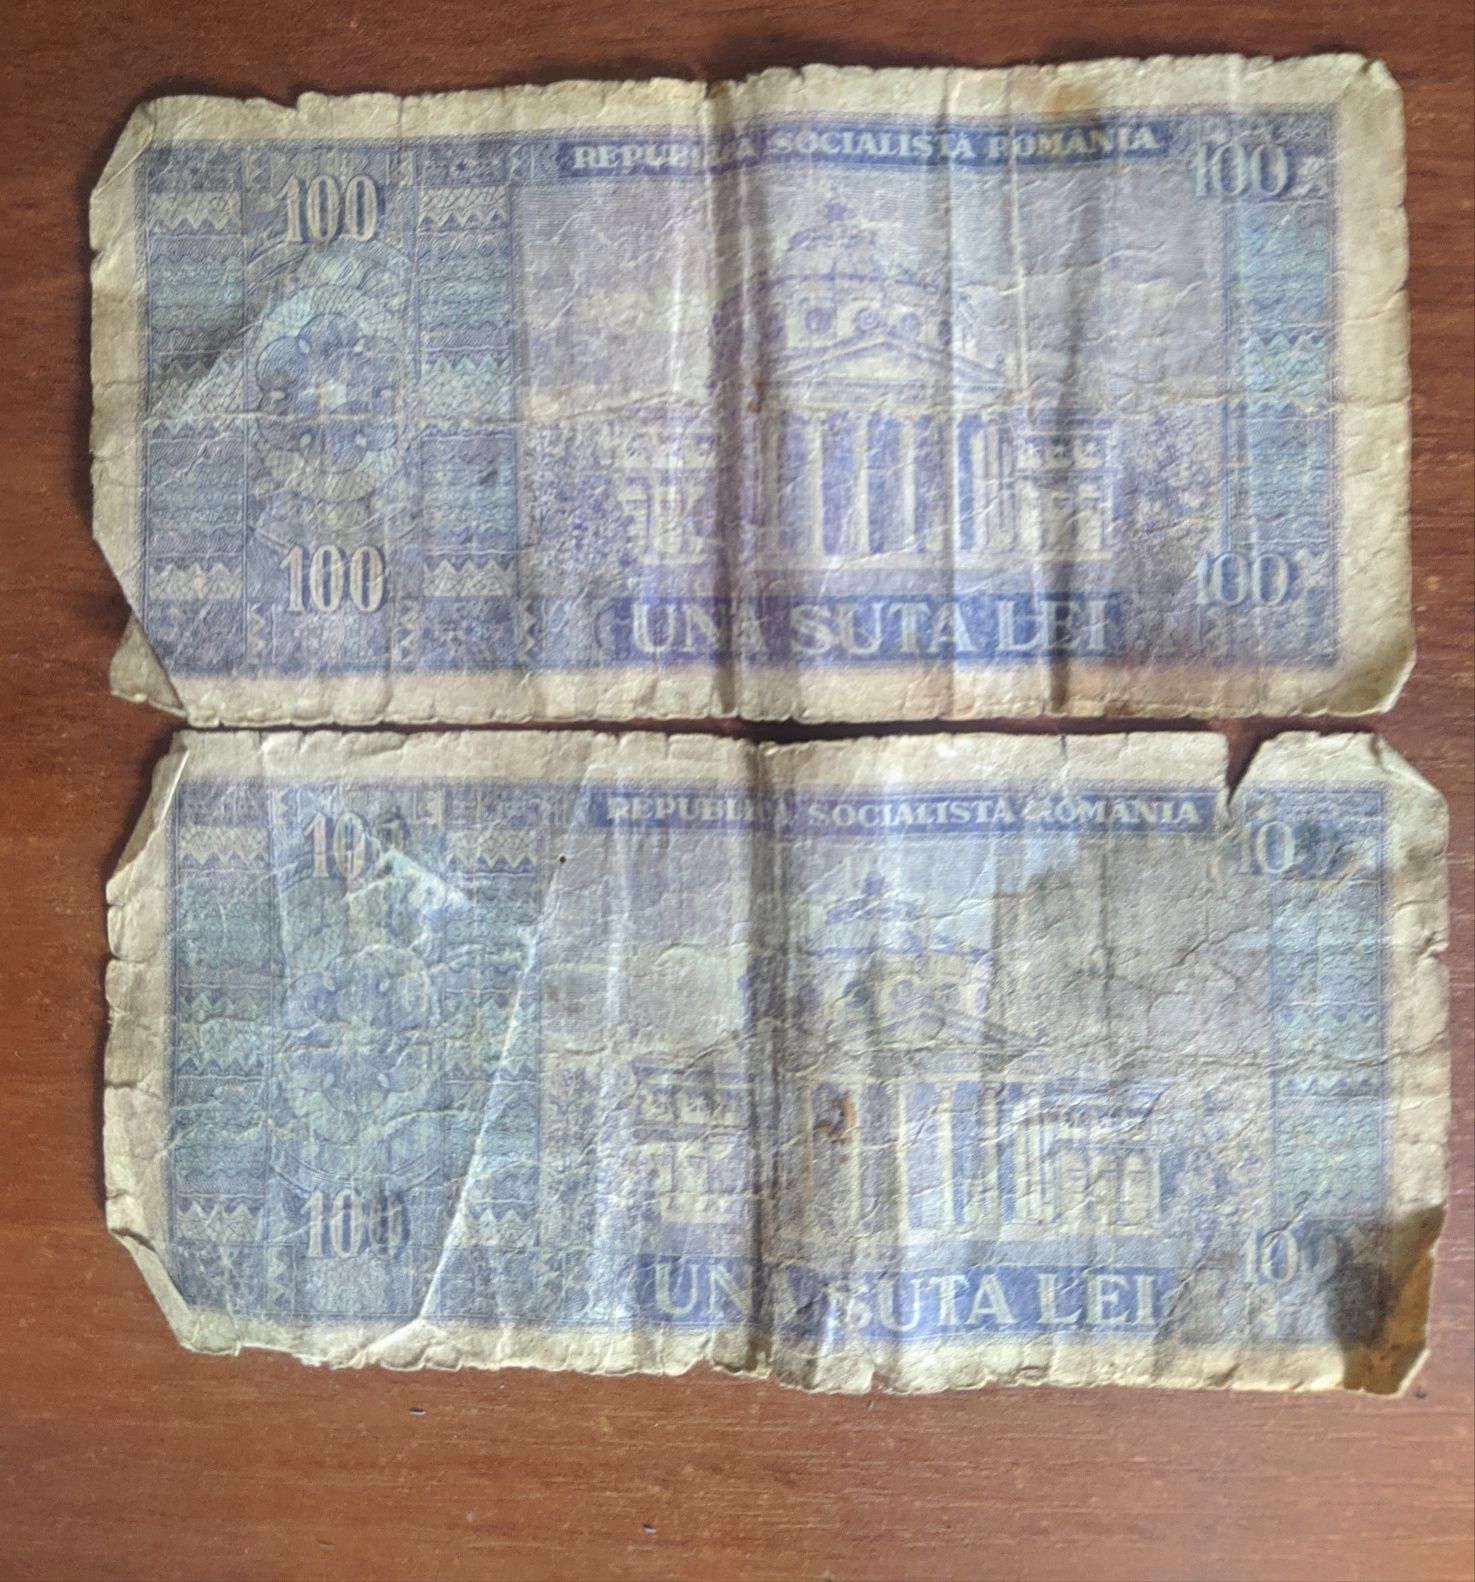 100 лей валюта Румынии